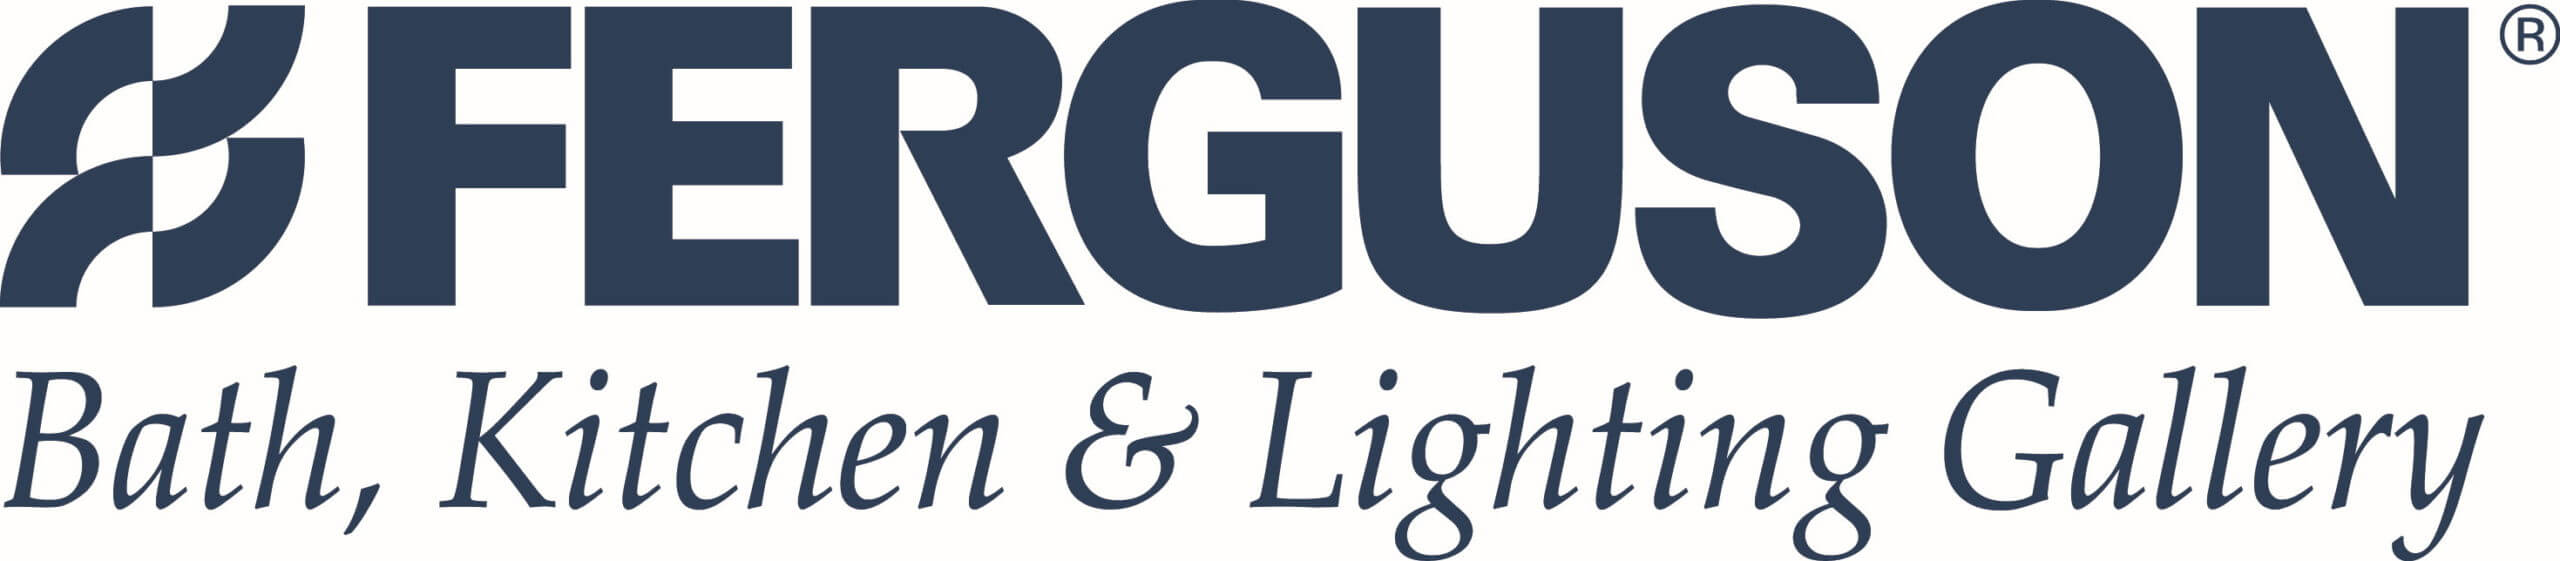 Ferguson Enterprises, Bath, Kitchen, & lLighting Gallery